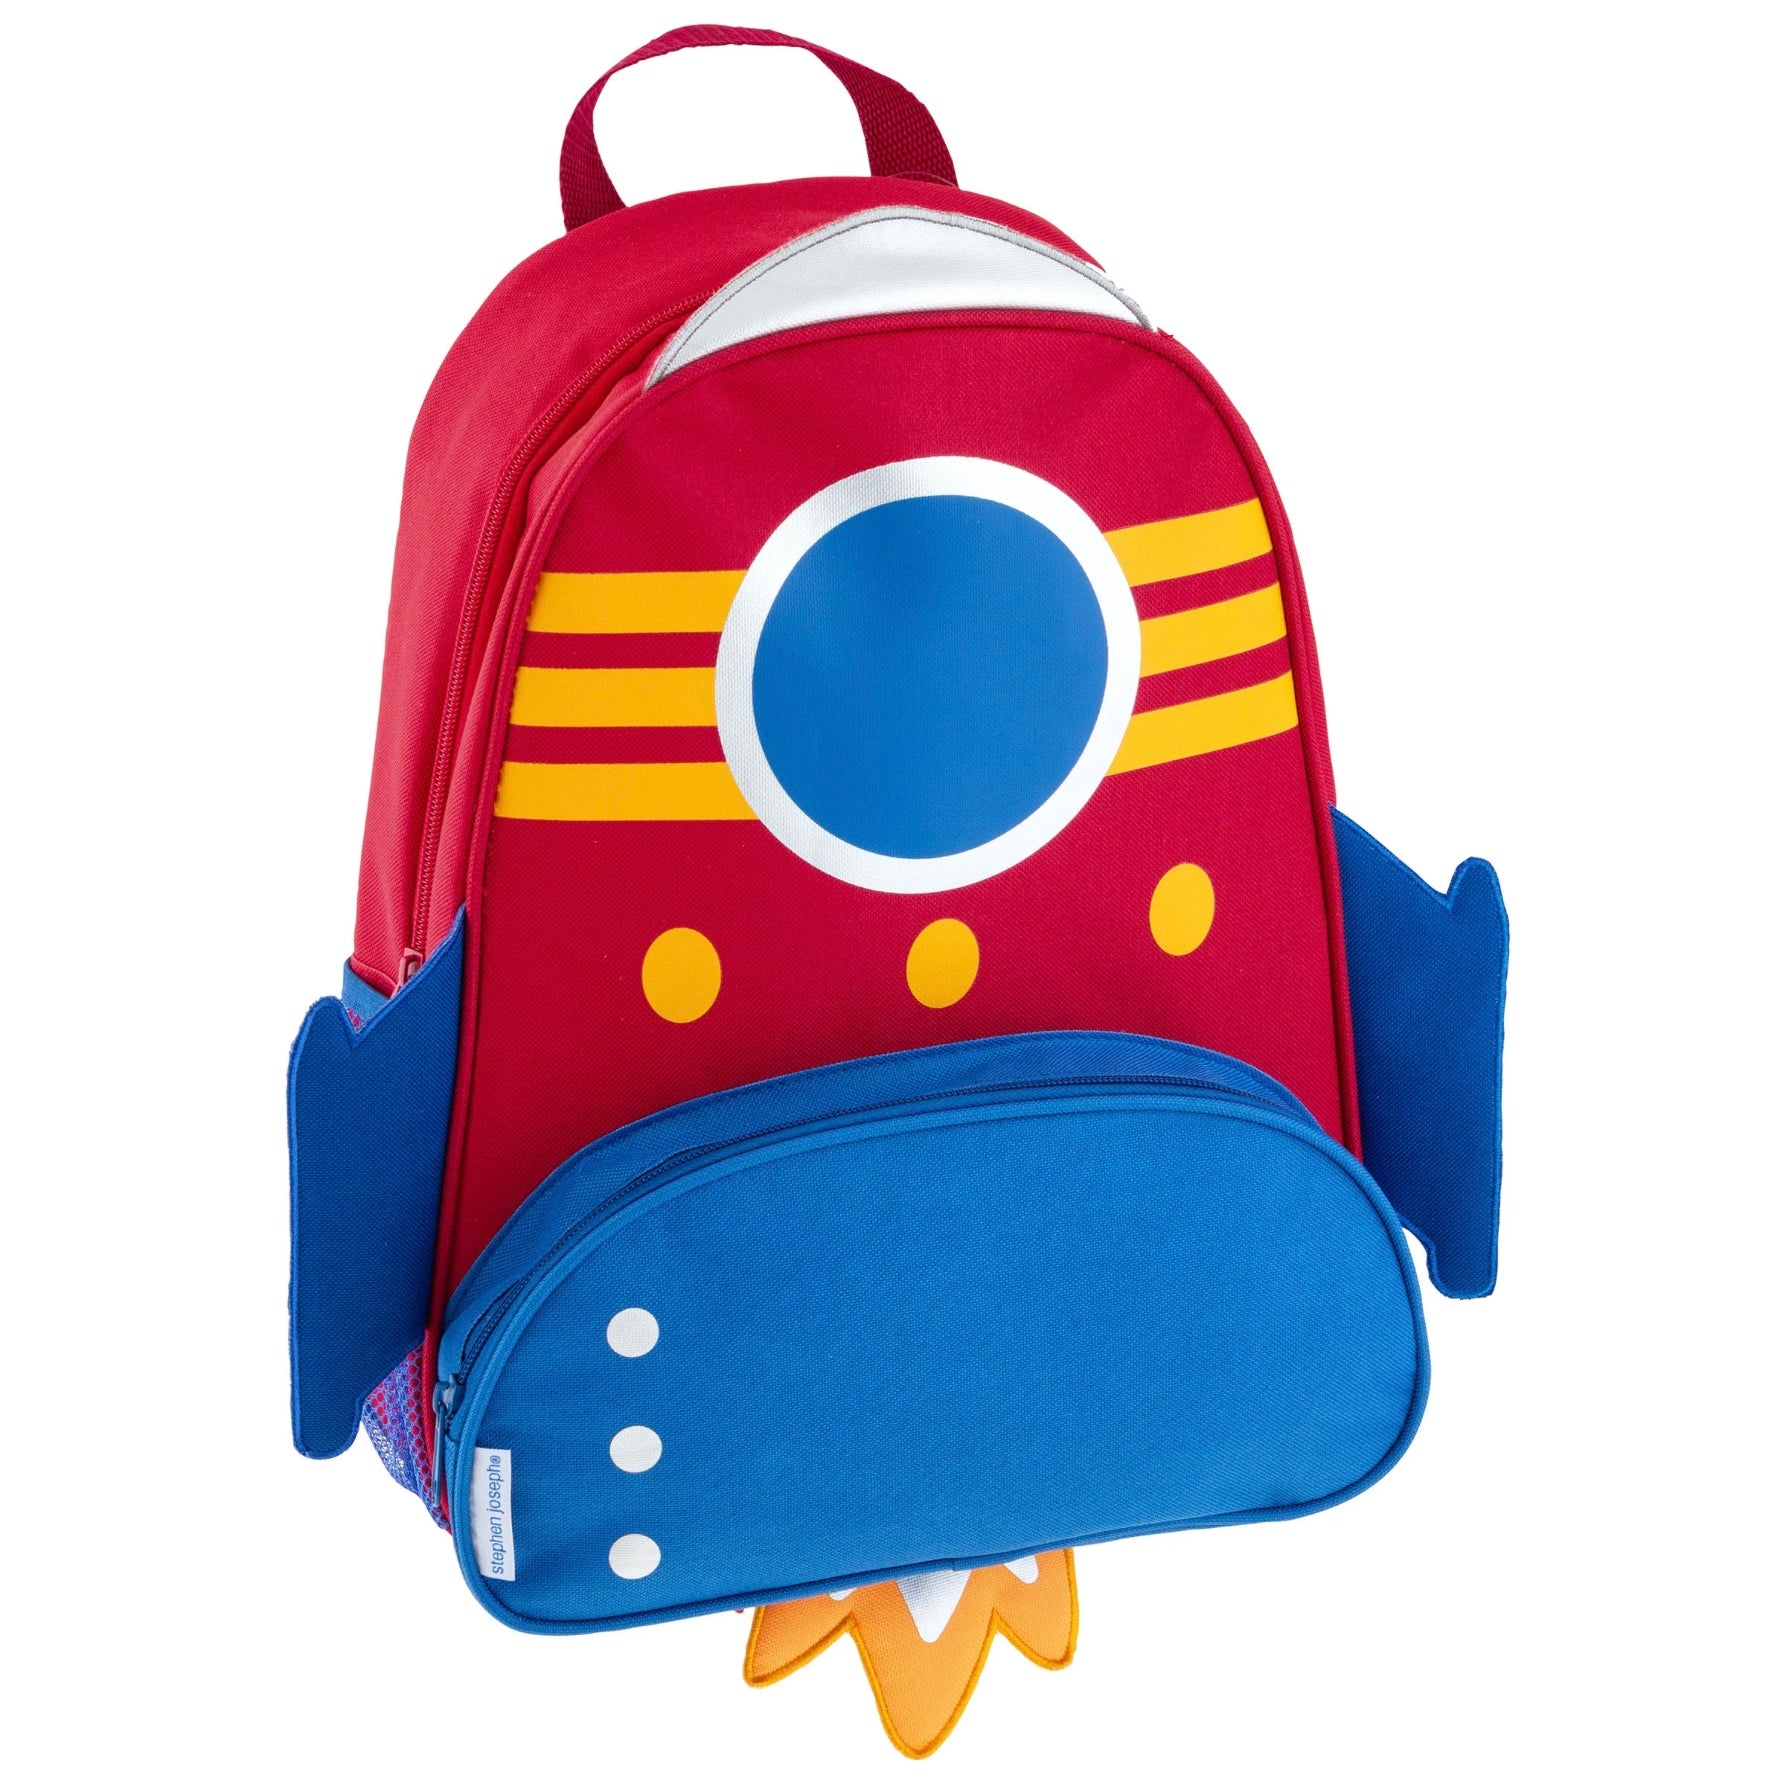 Personalized Sidekick Backpack Space